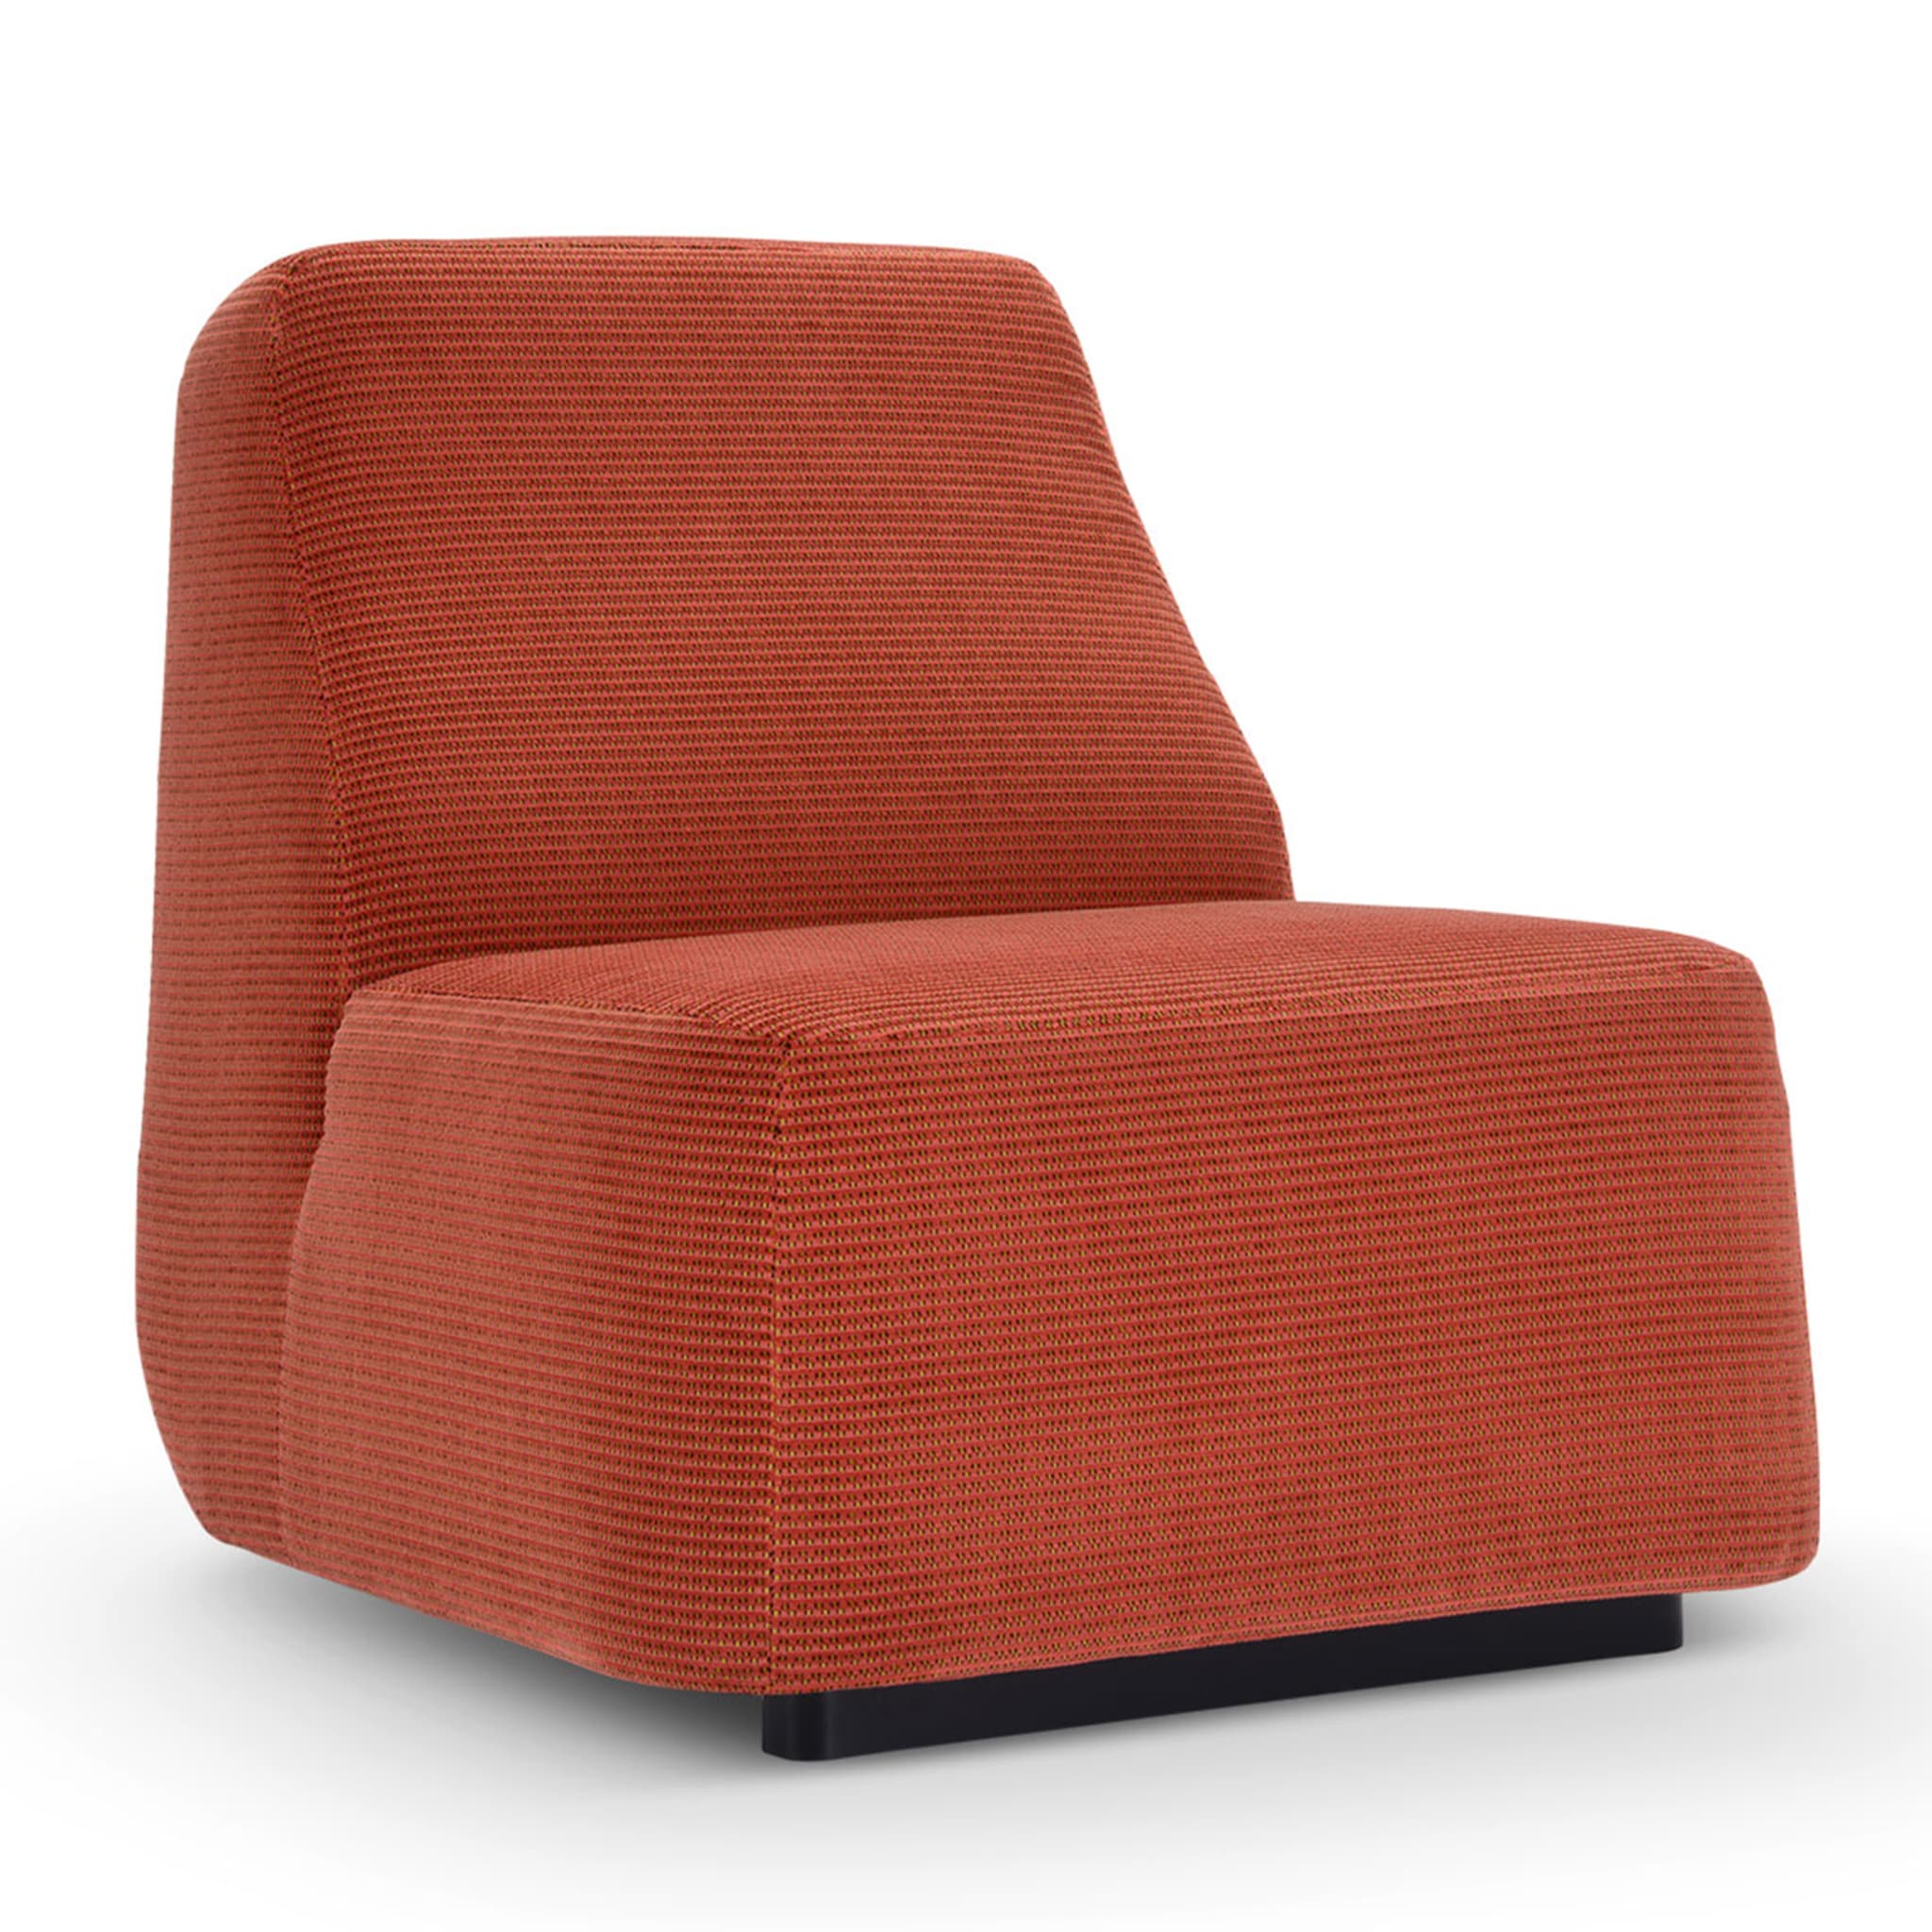 Nuda Orange Lounge Chair by Simone Micheli - Alternative view 3